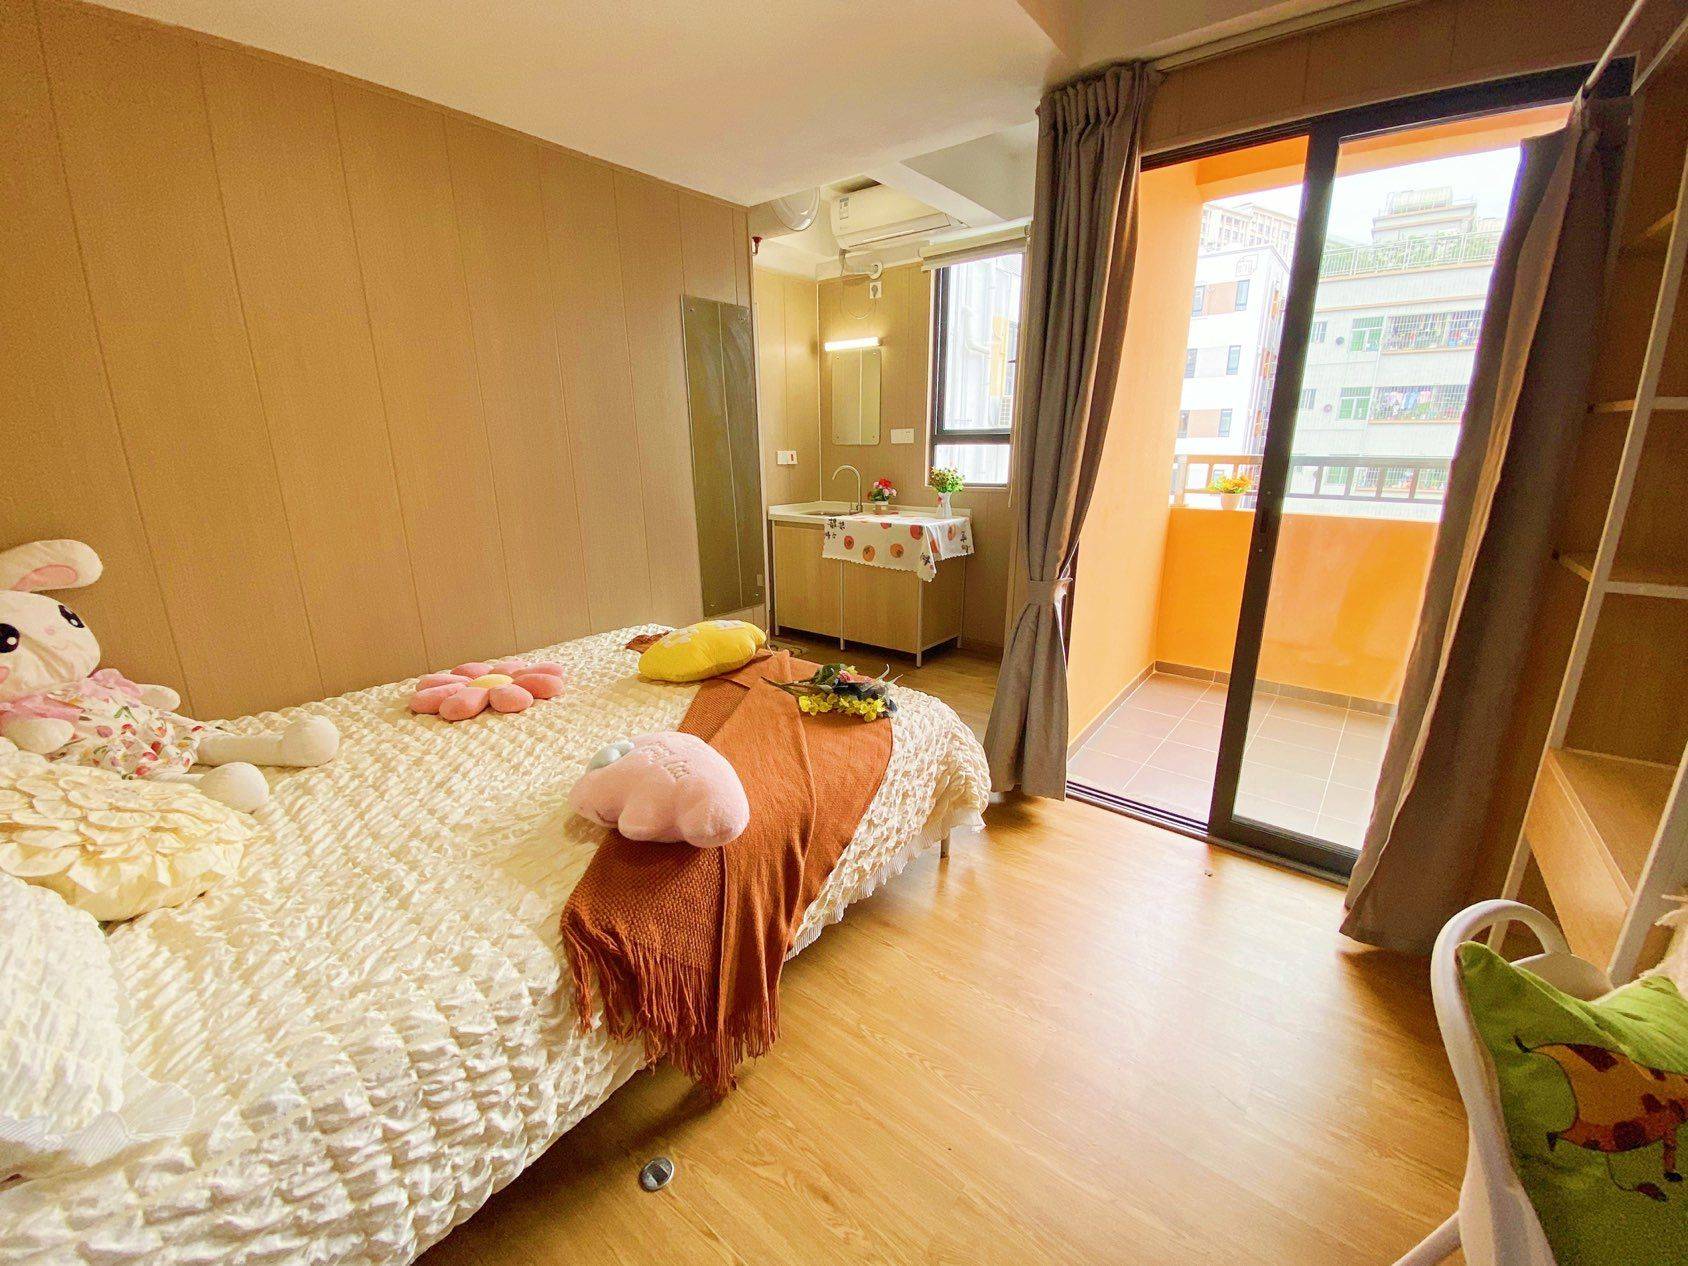 Shenzhen-Nanshan-Cozy Home,Clean&Comfy,No Gender Limit,Hustle & Bustle,“Friends”,Chilled,LGBTQ Friendly